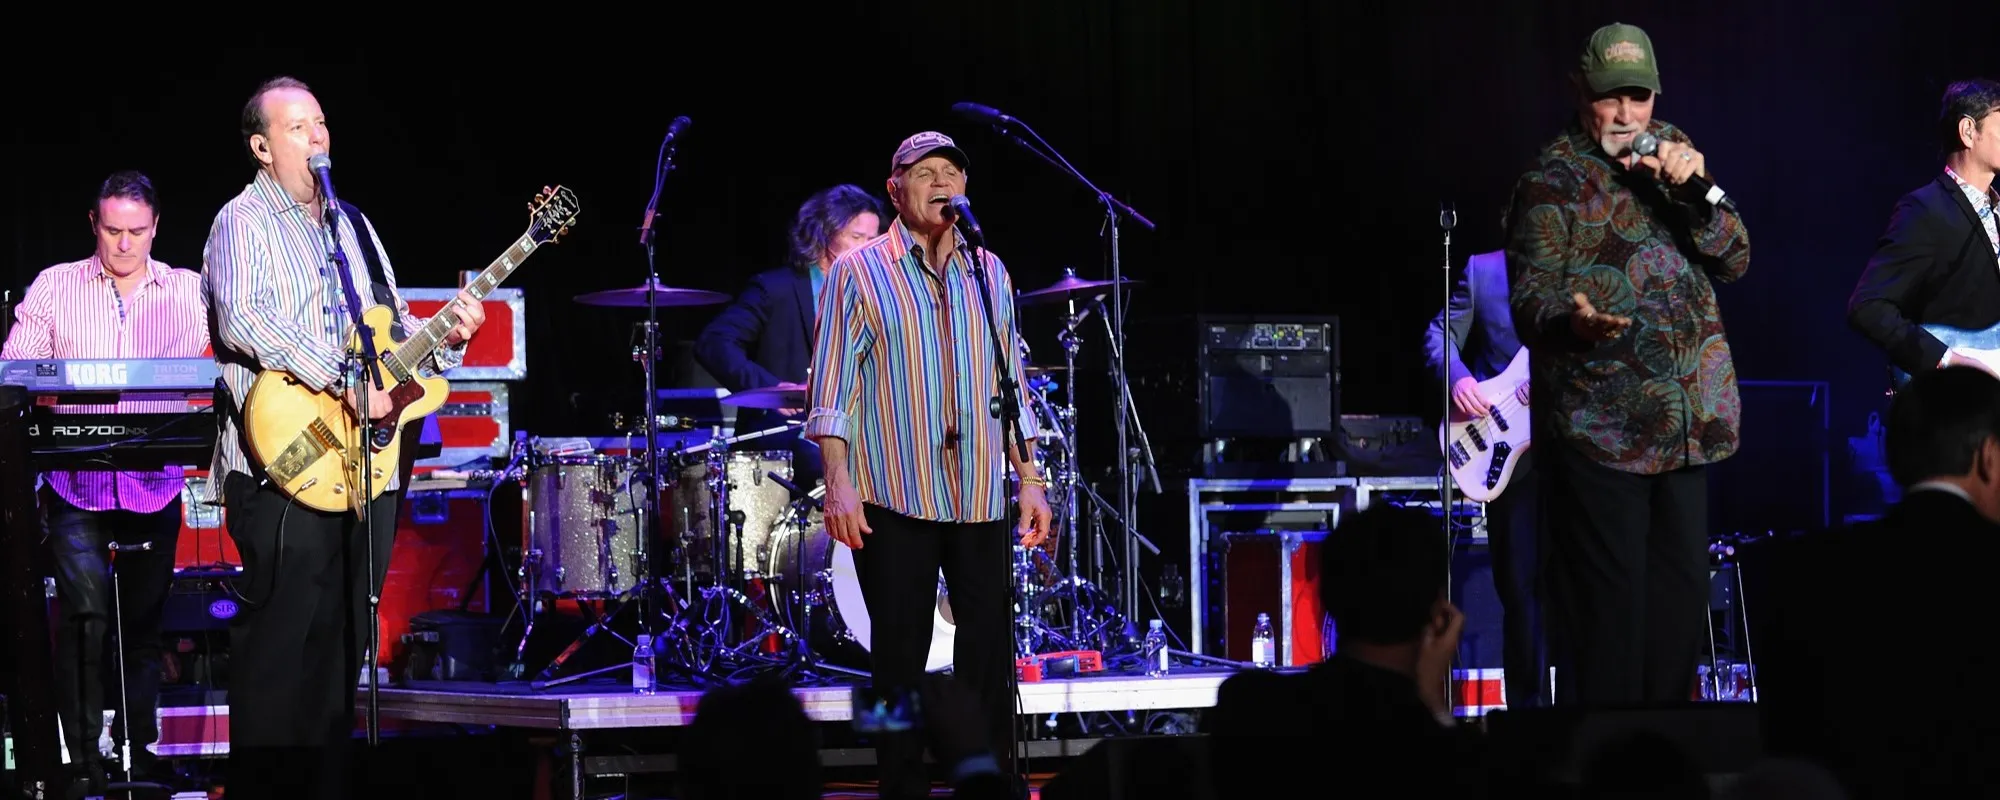 Beach Boys Members Pay Homage to Late Collaborator Jeffrey Foskett: “I’m So Heartbroken”